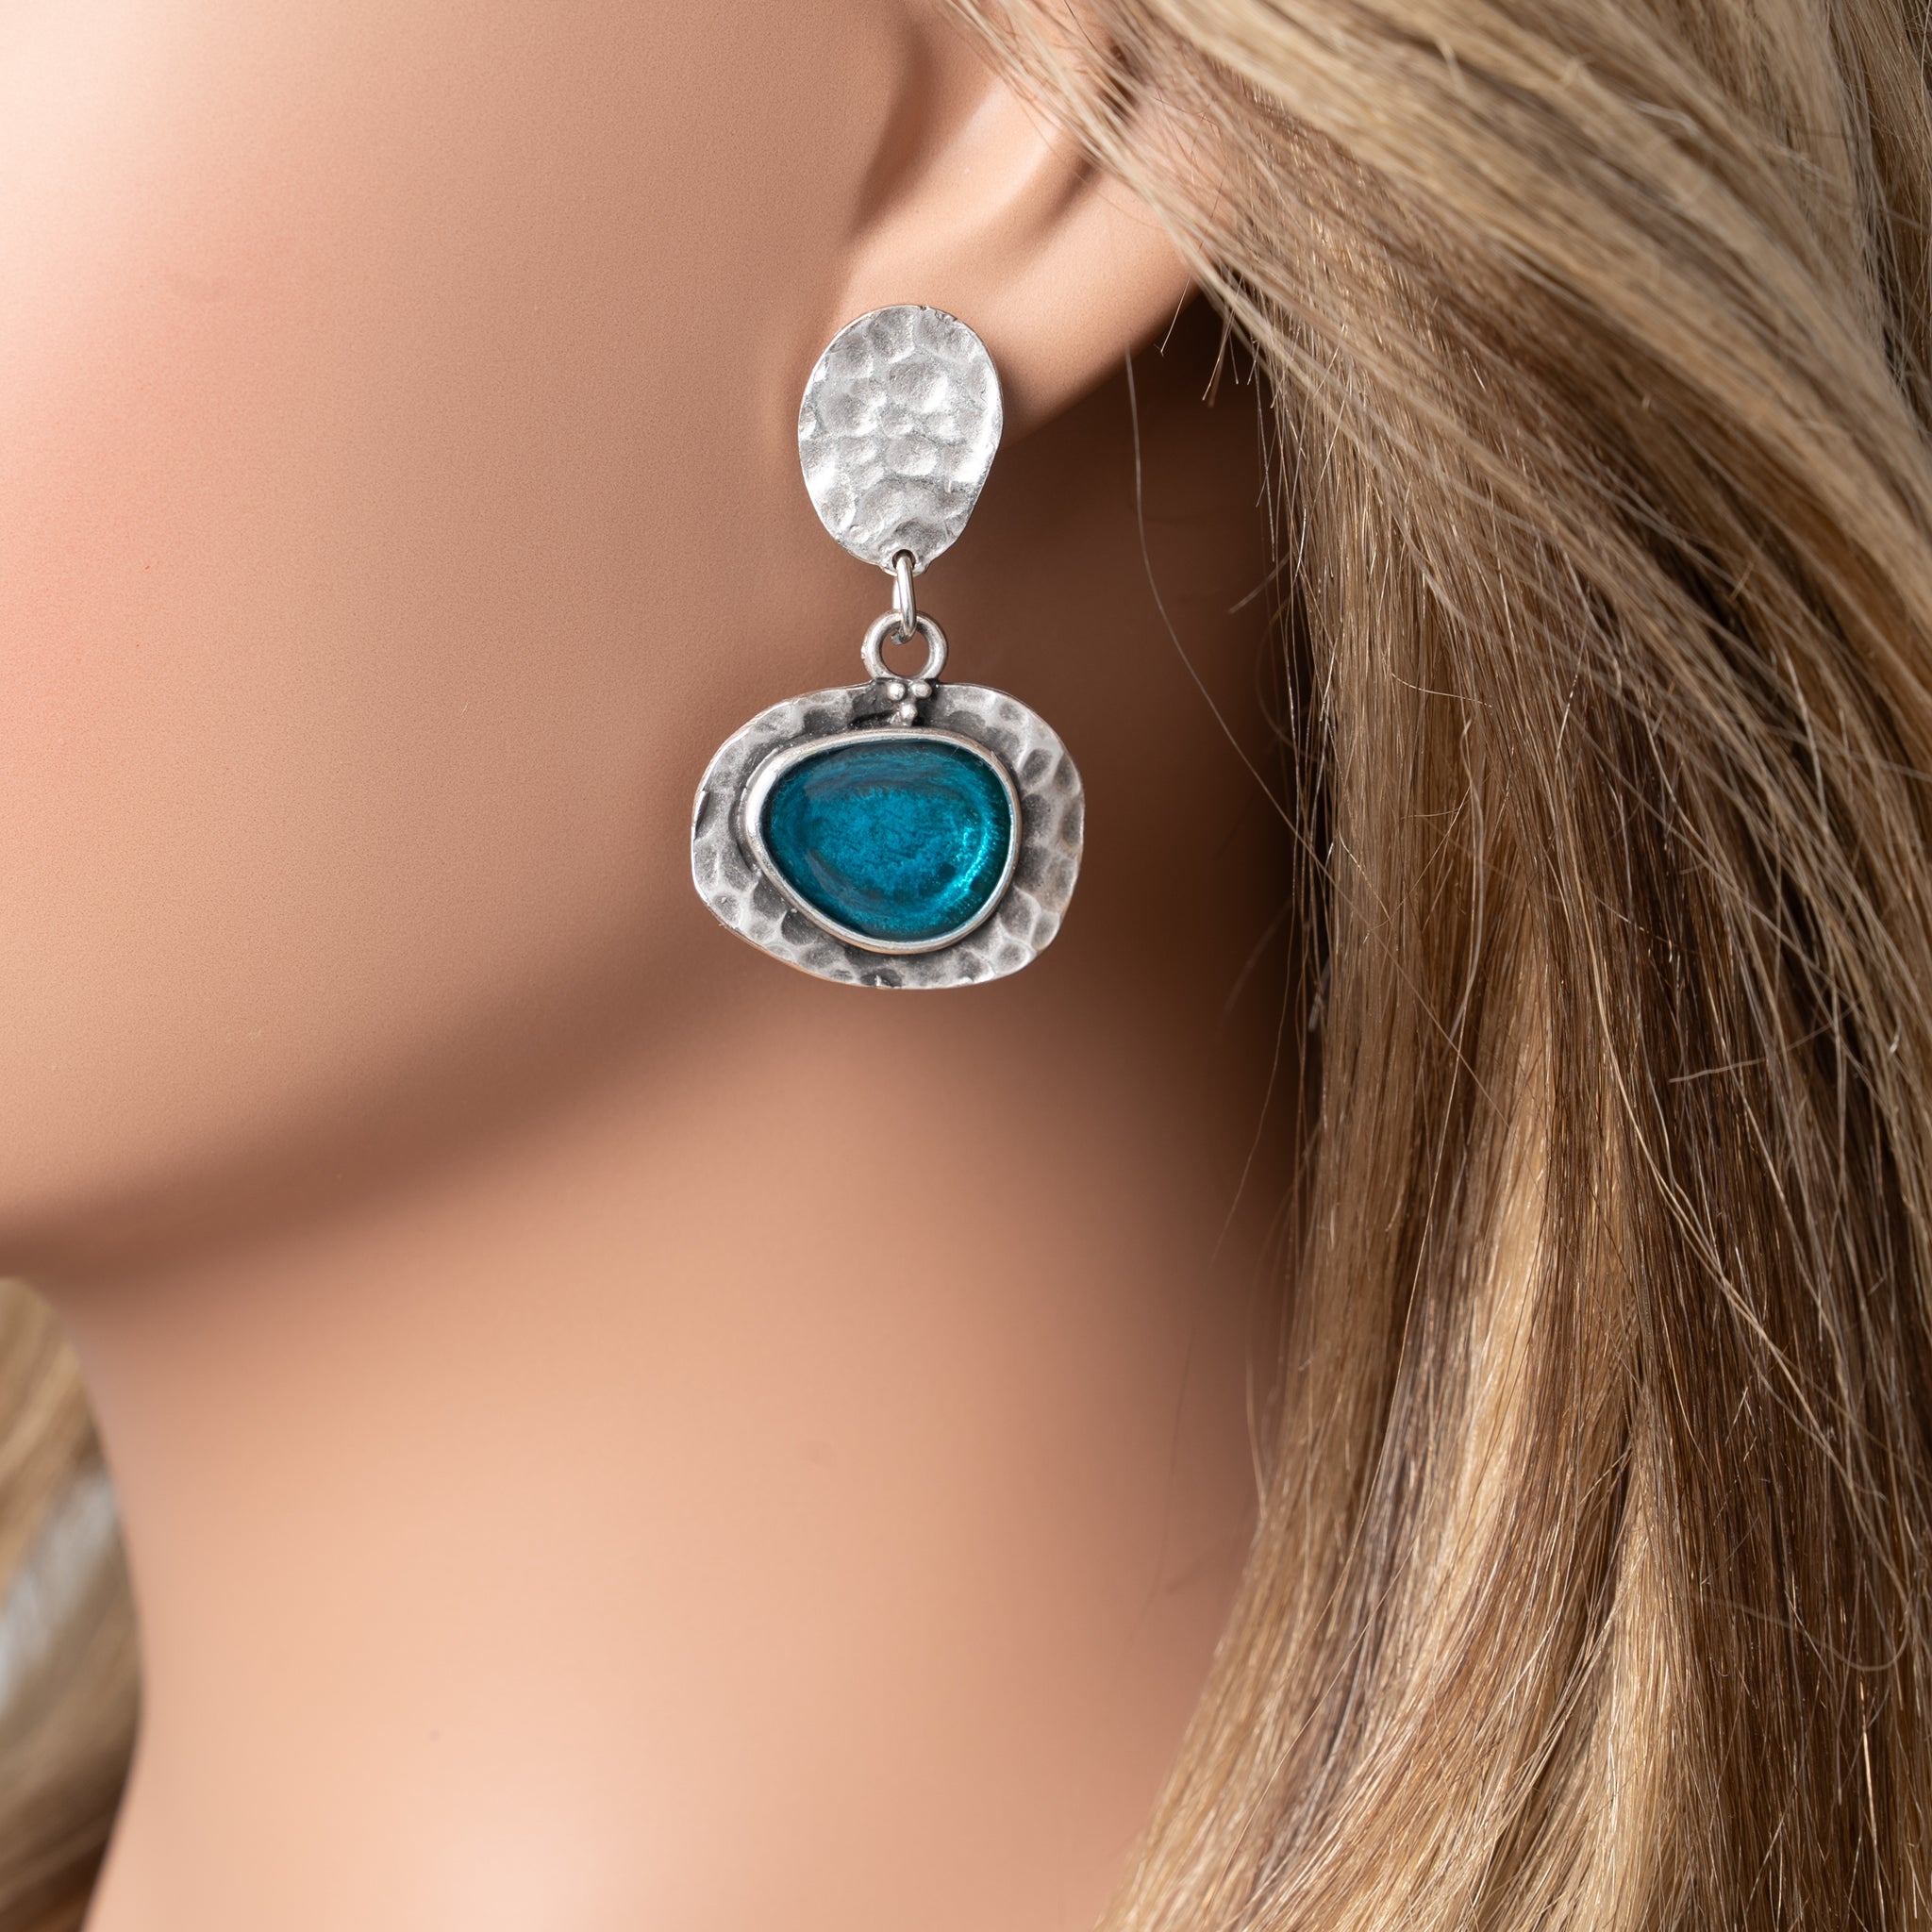 Euphoria Allure Blue earrings - Cherry Blossom